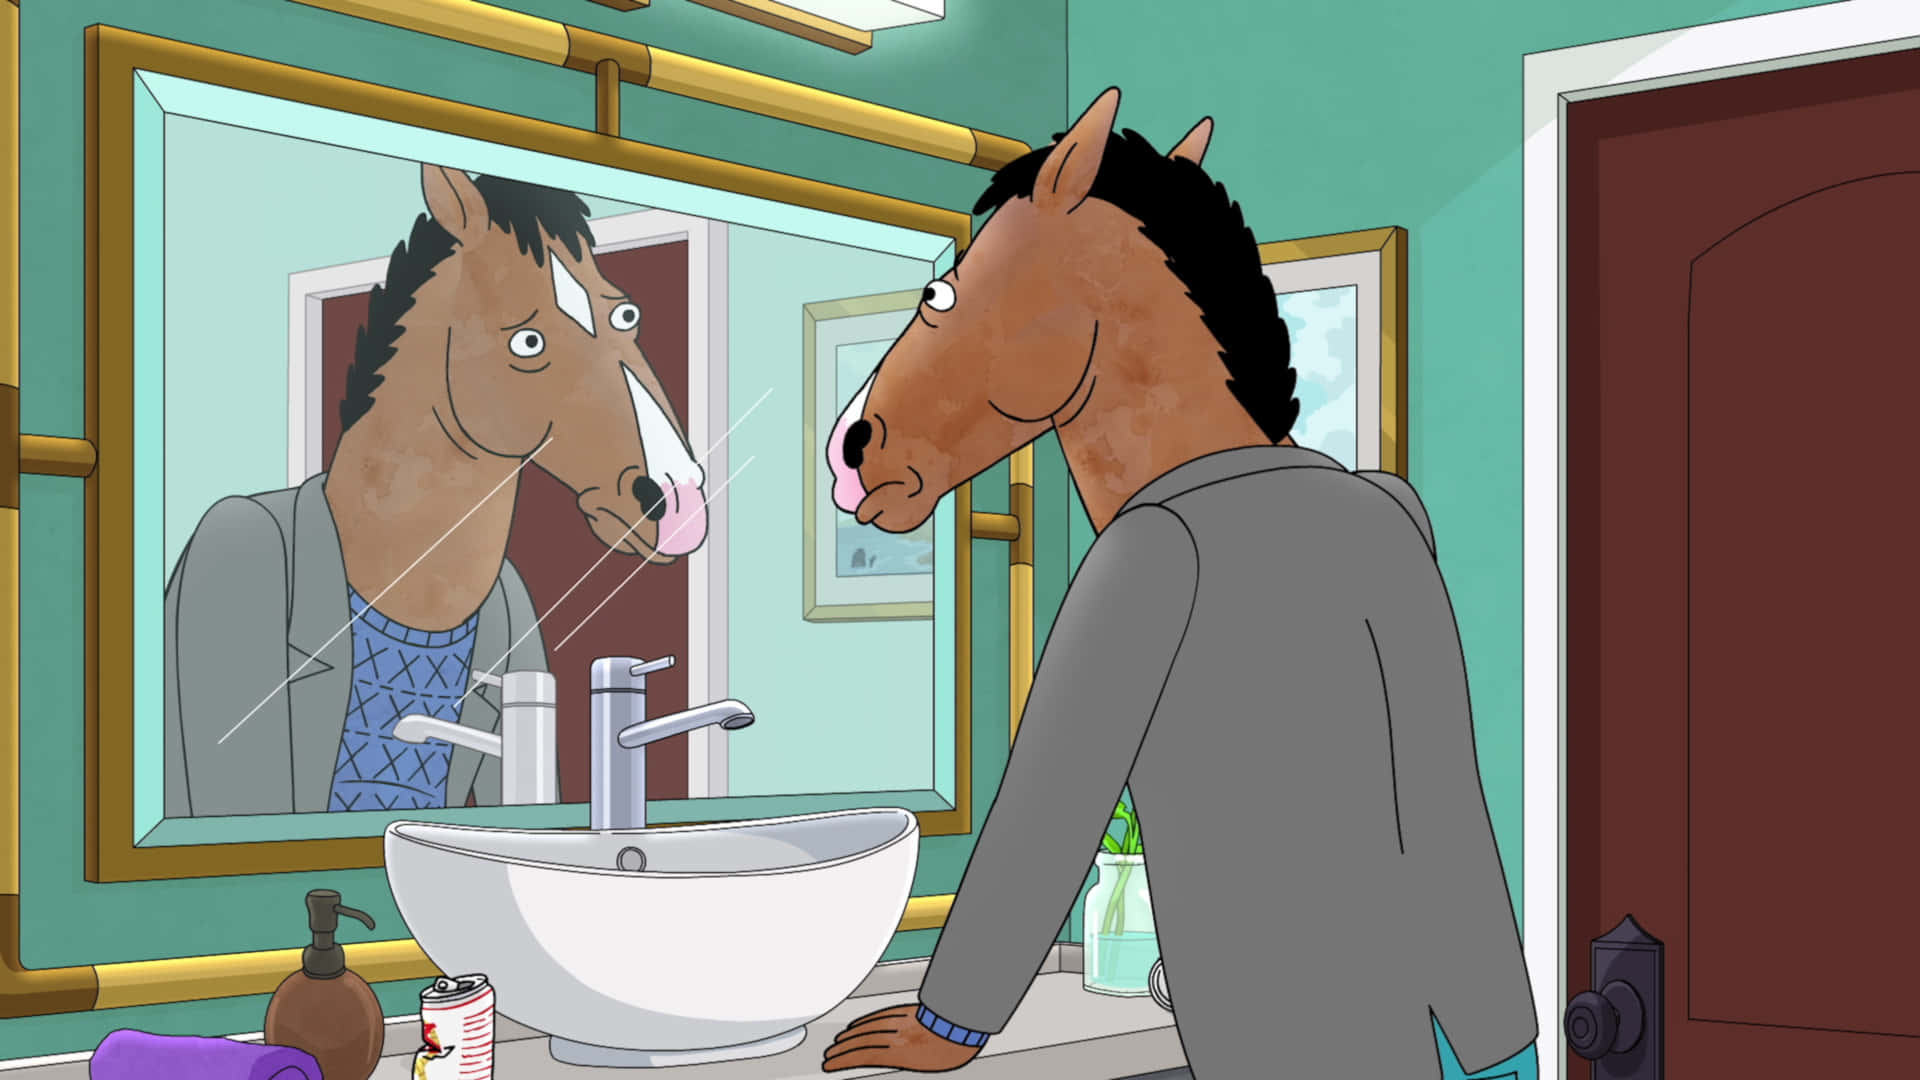 BoJack Horseman, beloved animated sitcom